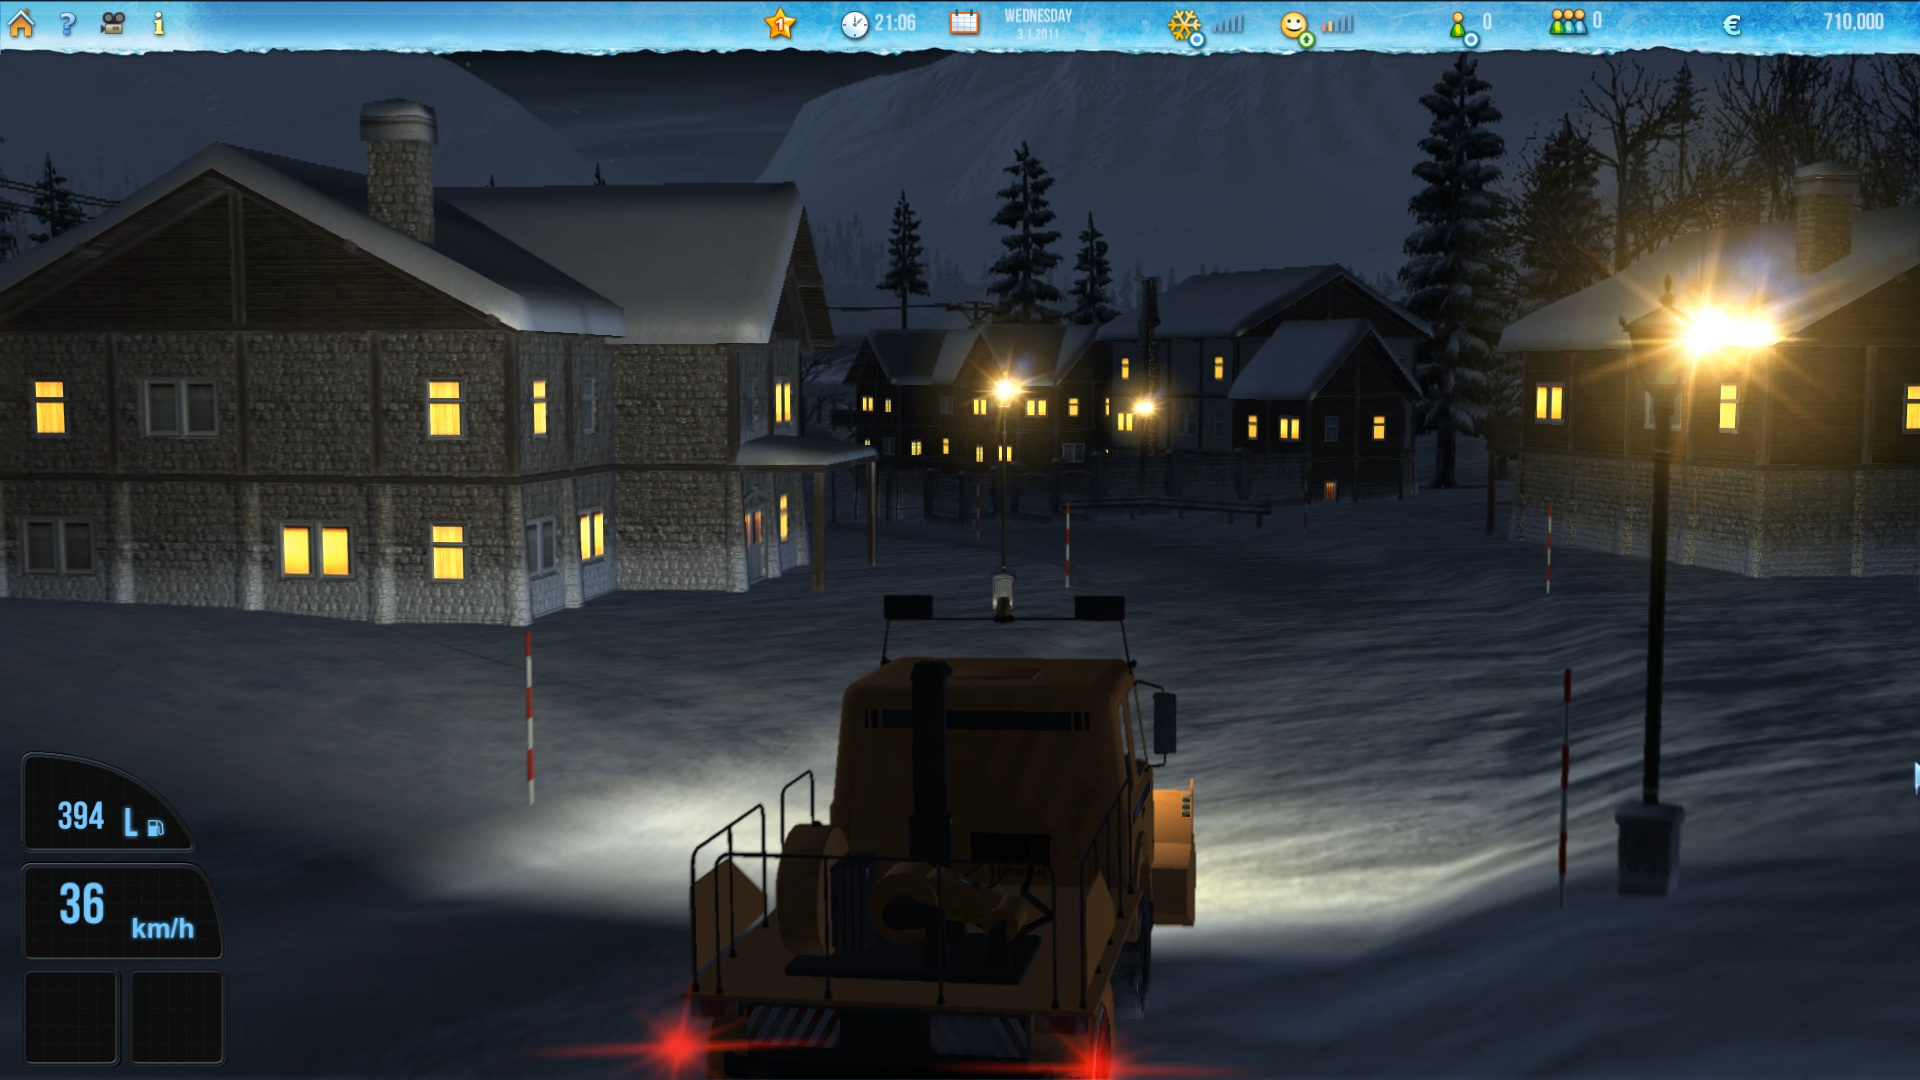 Ski-World Simulator screenshot